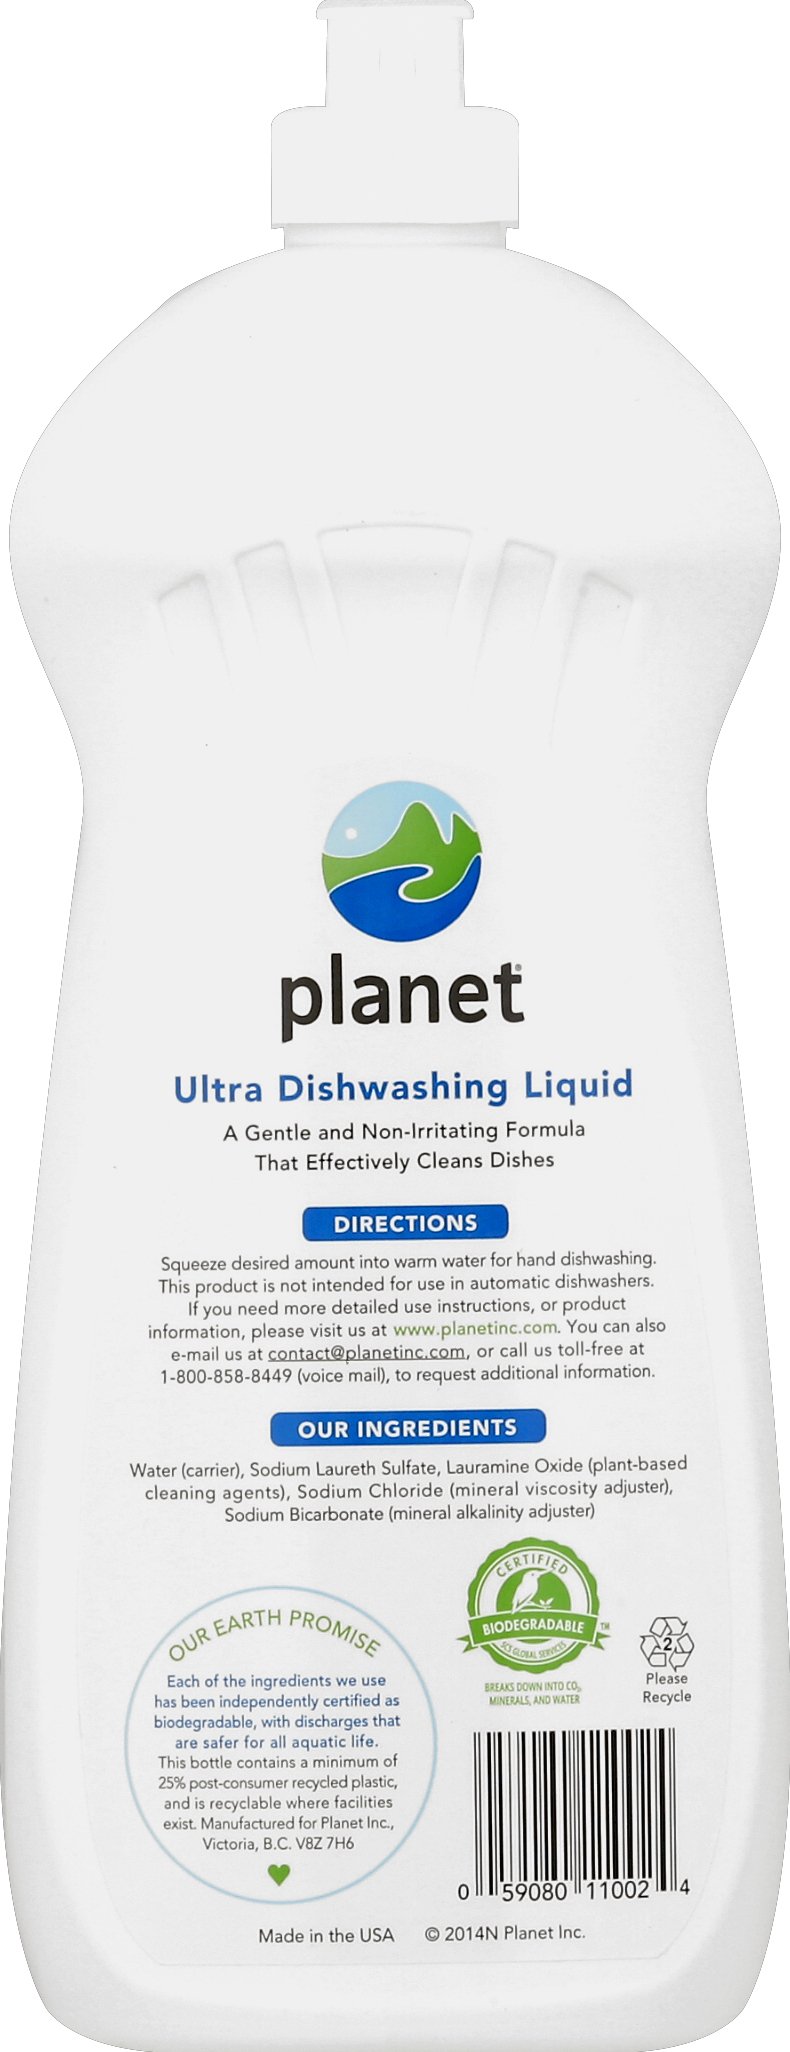 Planet Ultra Dishwashing Liquid, 25 fl oz. - image 2 of 2